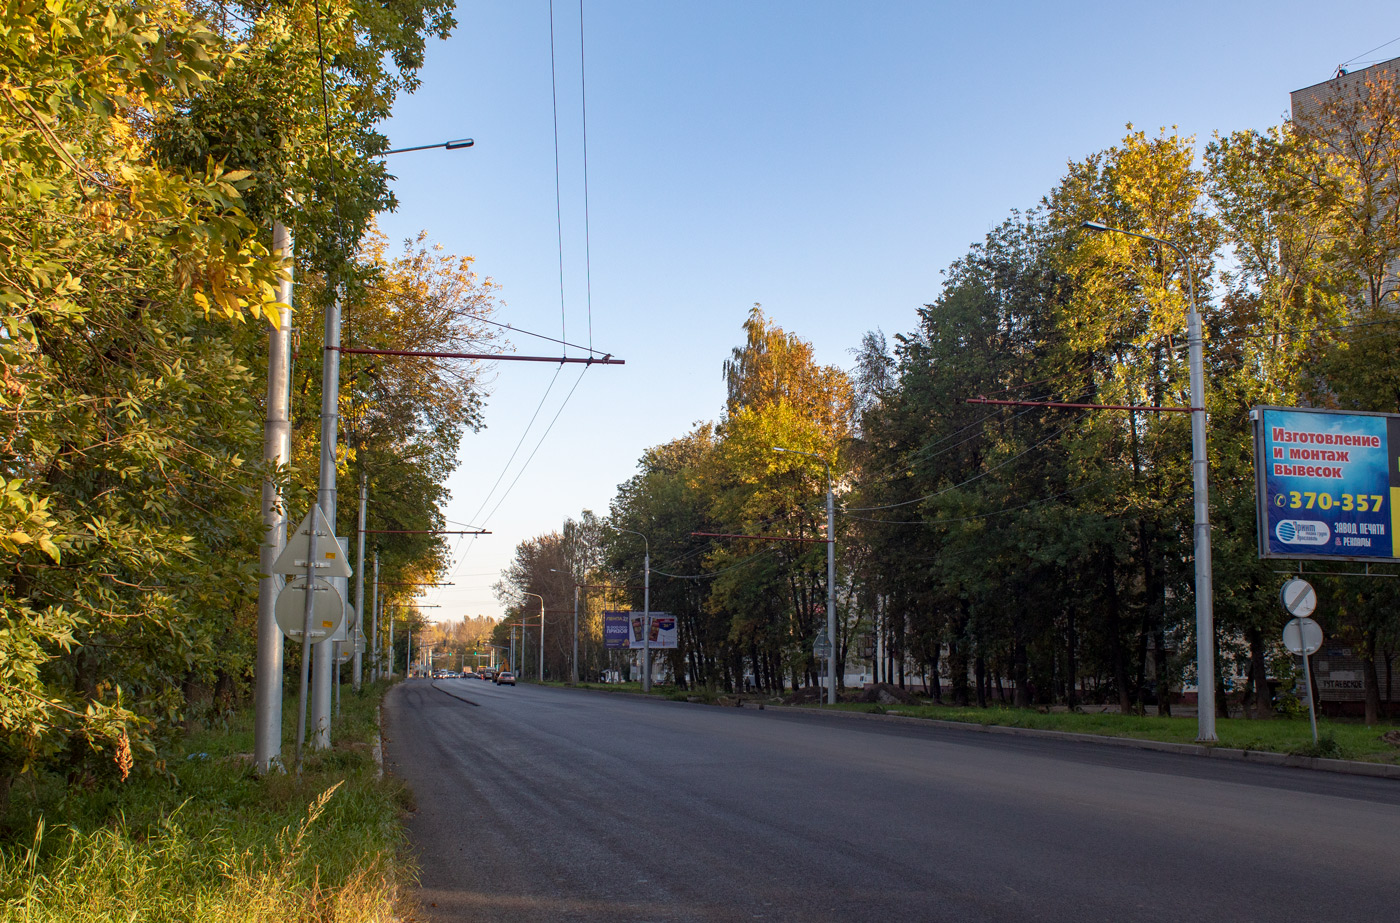 Iaroslavl — Reconstruction of tutaevsky road 2019-2020; Iaroslavl — Trolleybus lines